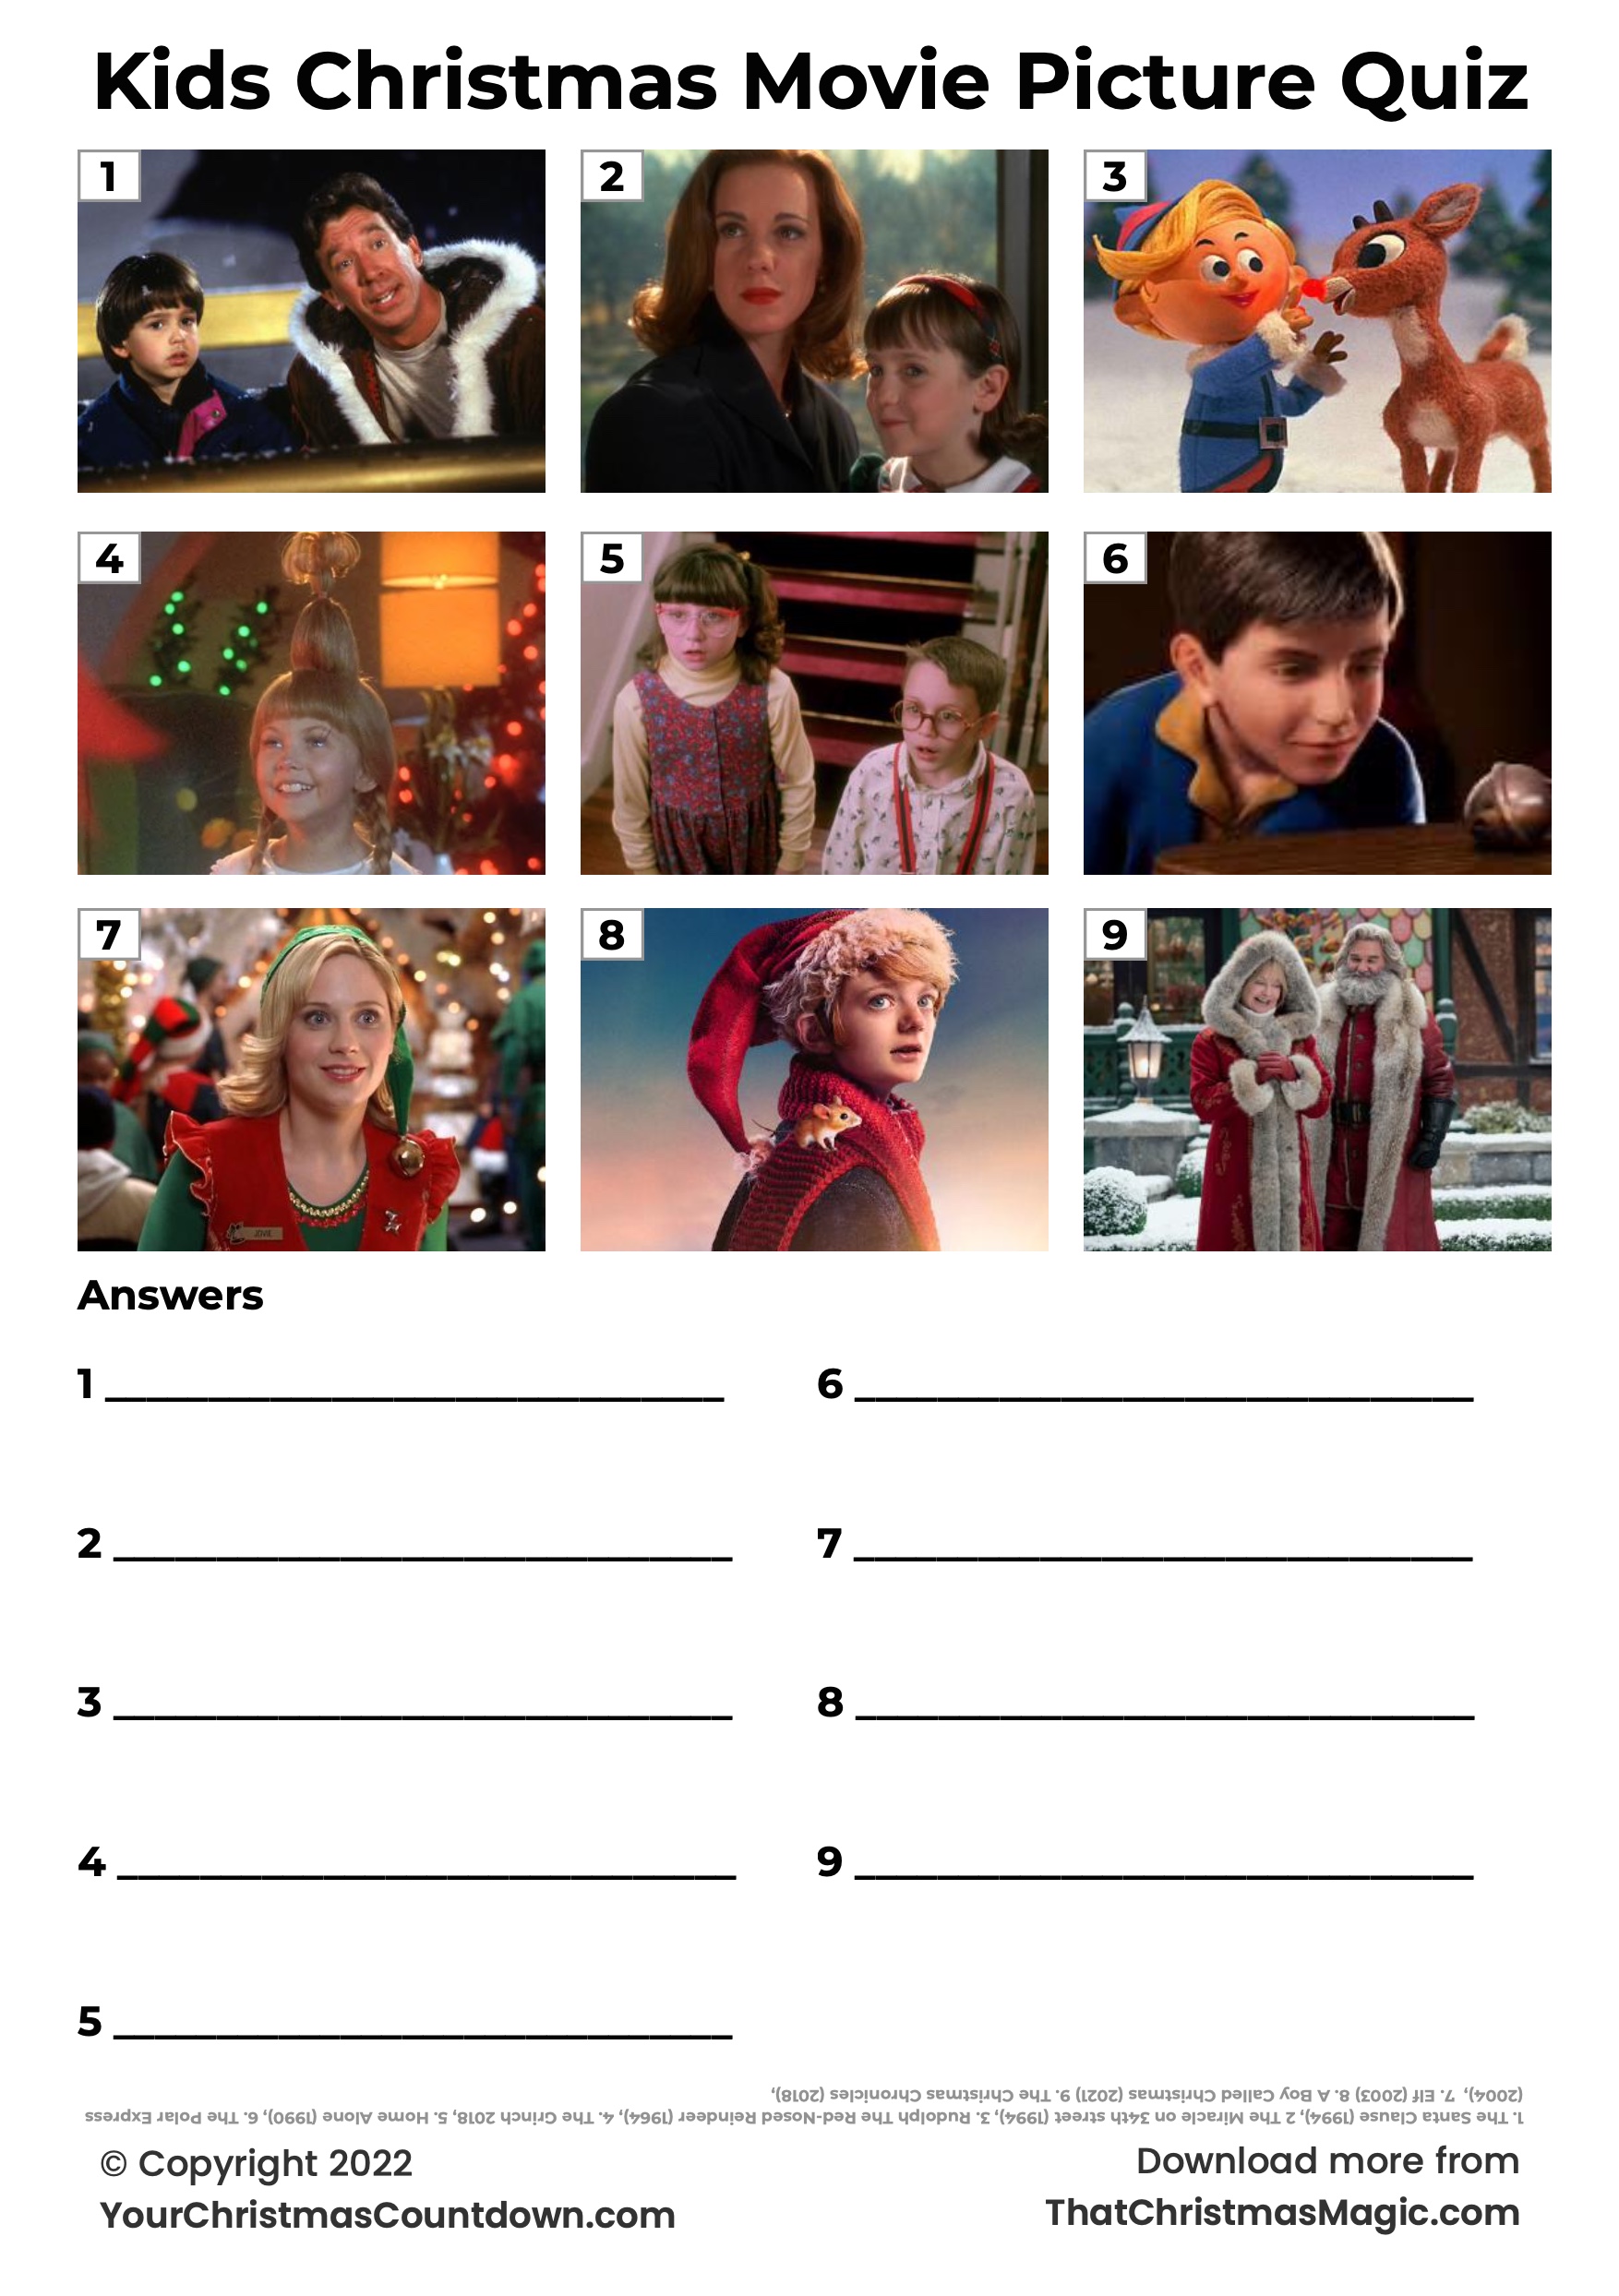 Kids Christmas Movie Picture Quiz